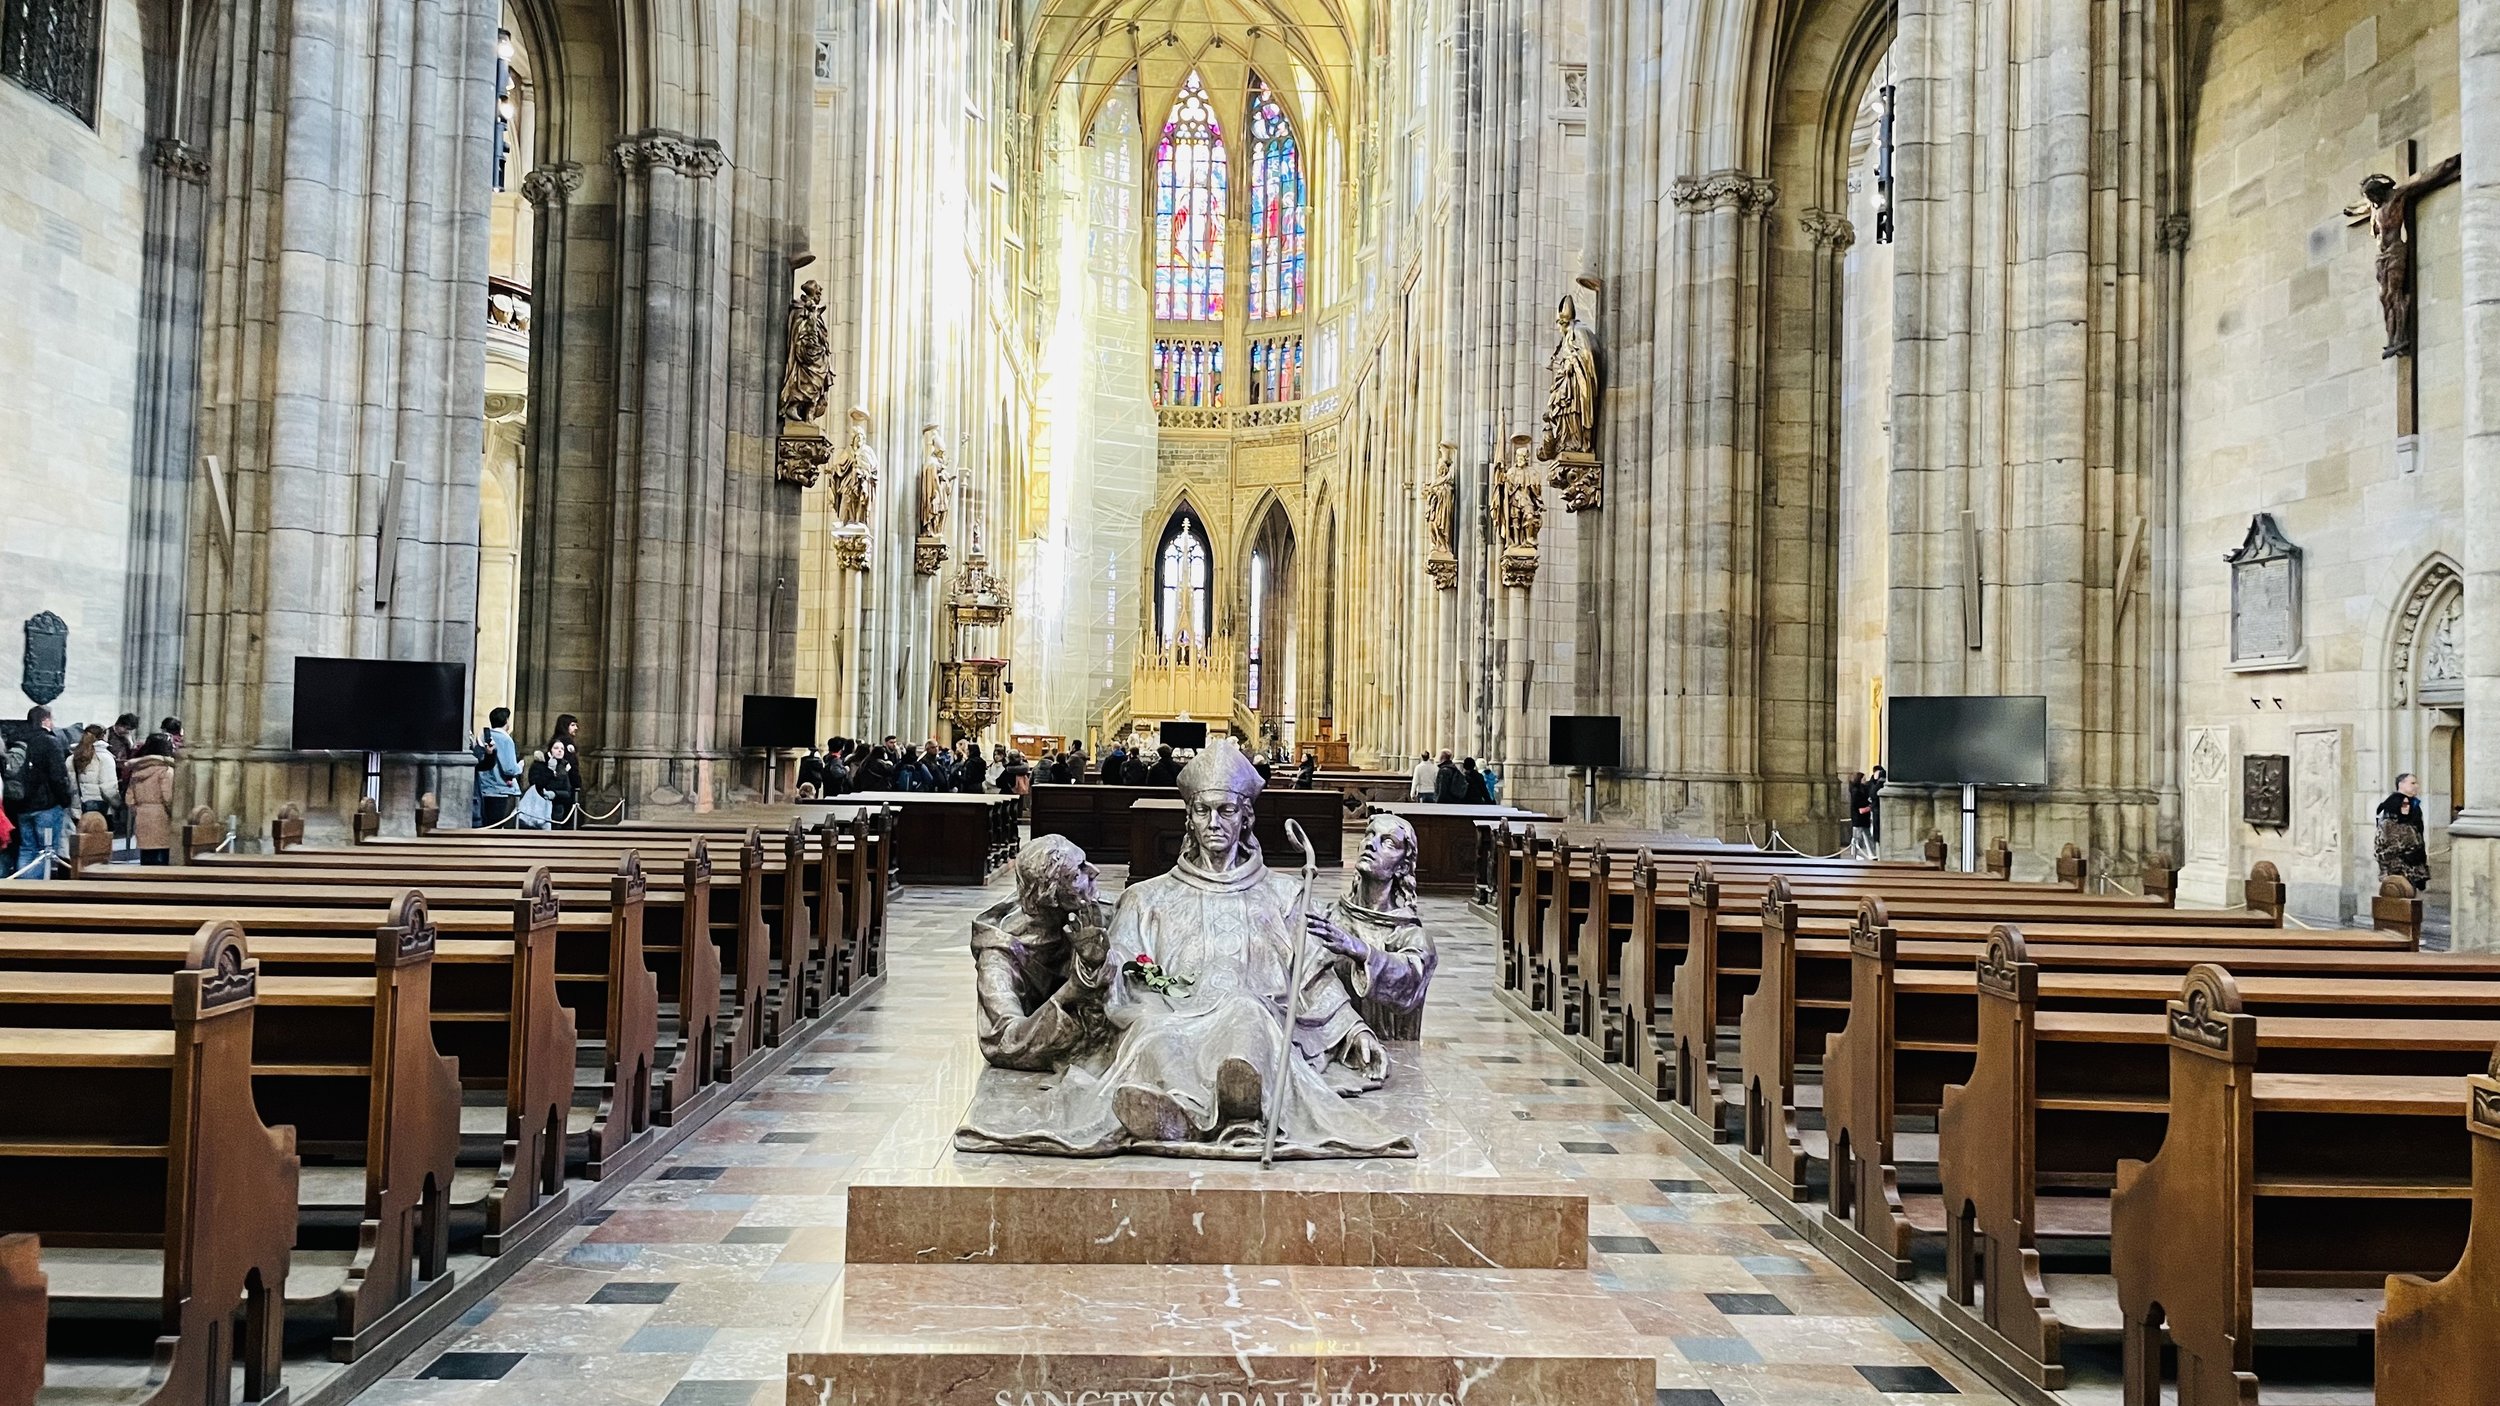 Statue St. Vojtech (Adalberto) in St. Vitus Cathedral